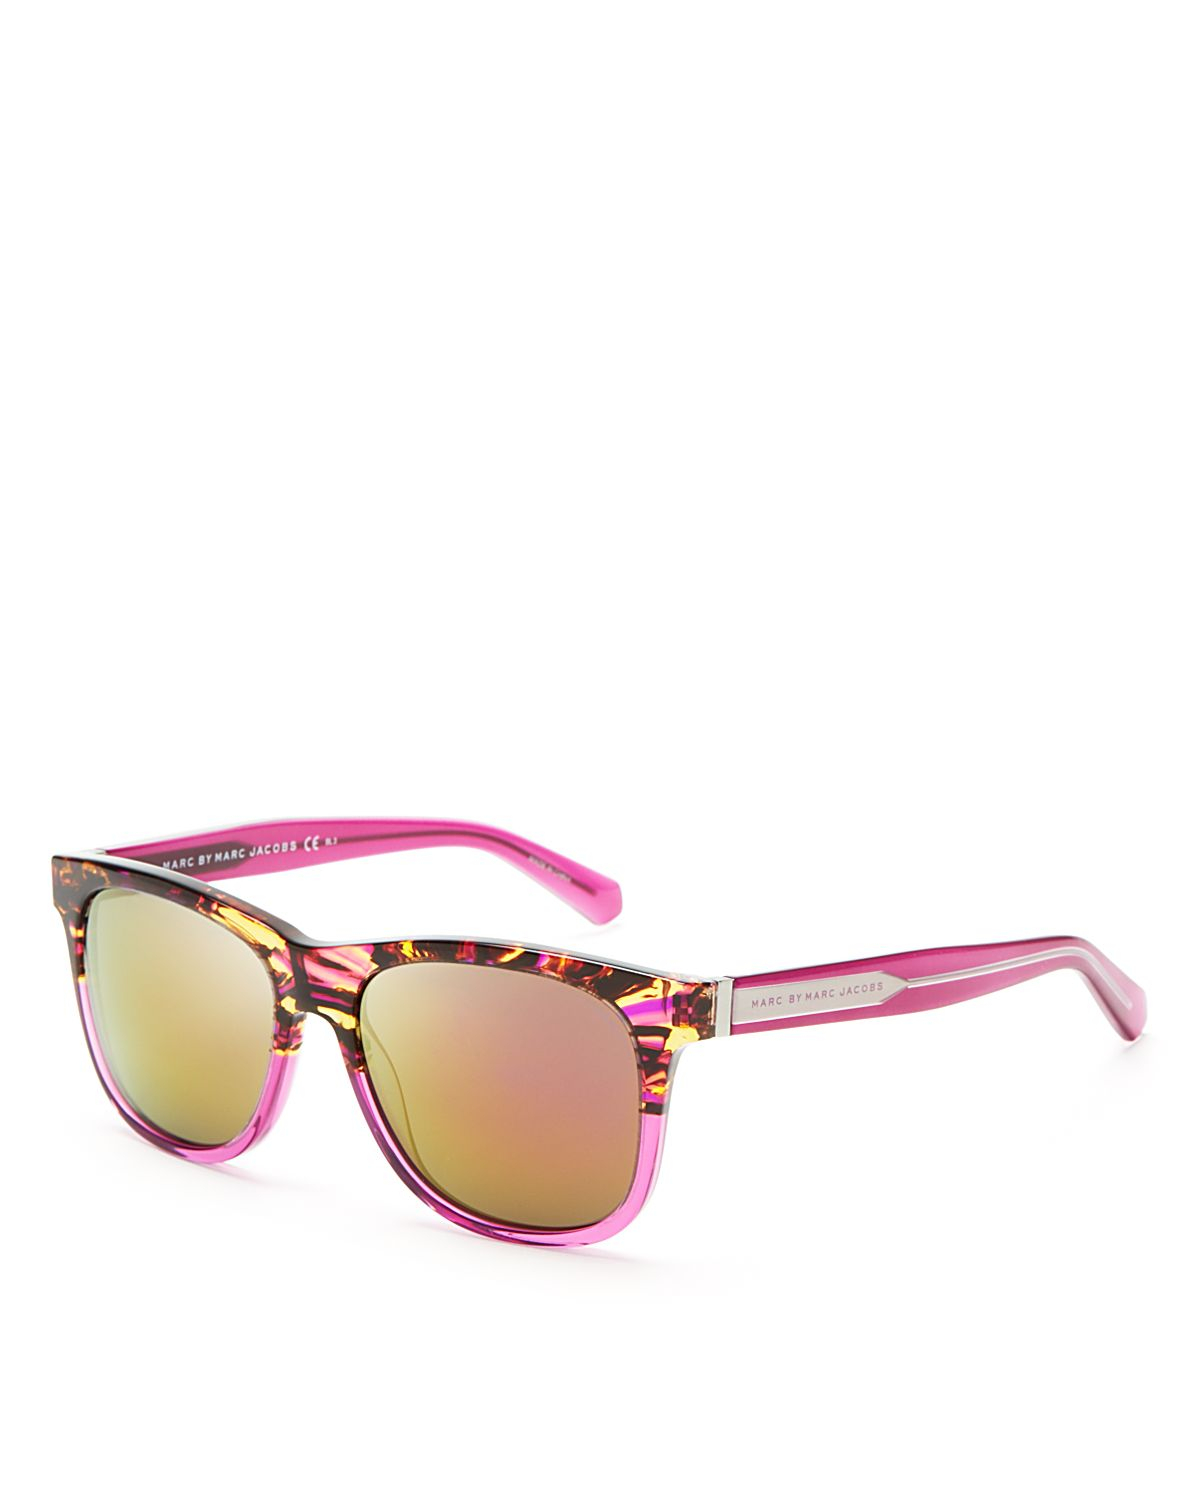 Marc By Marc Jacobs Wayfarer Sunglasses in Pink (Havana Pink/Pink Mirror) | Lyst